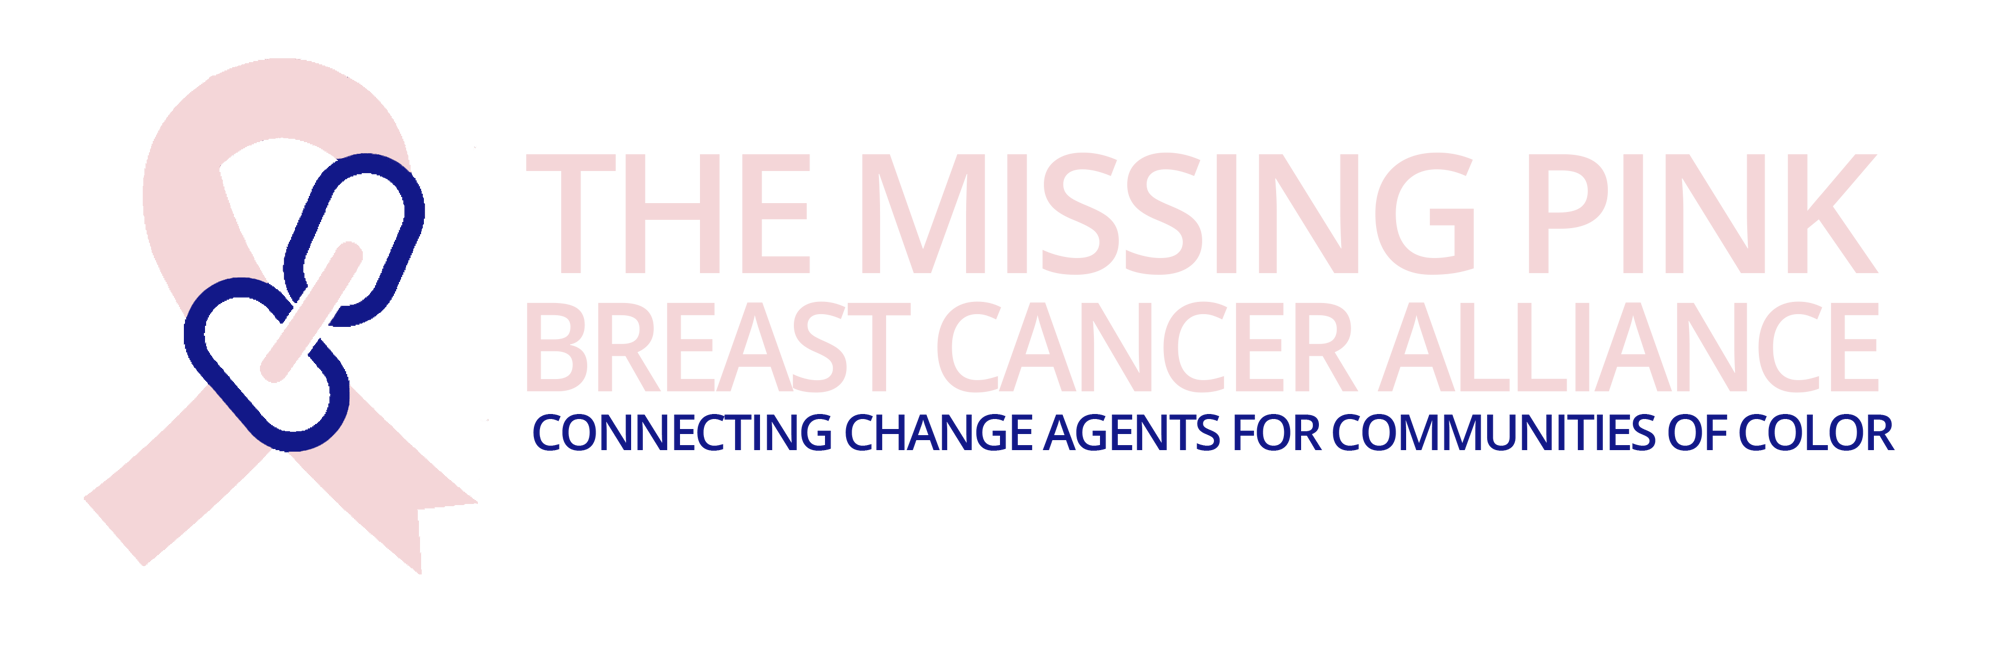 The Missing Pink BCA Logo Final-1